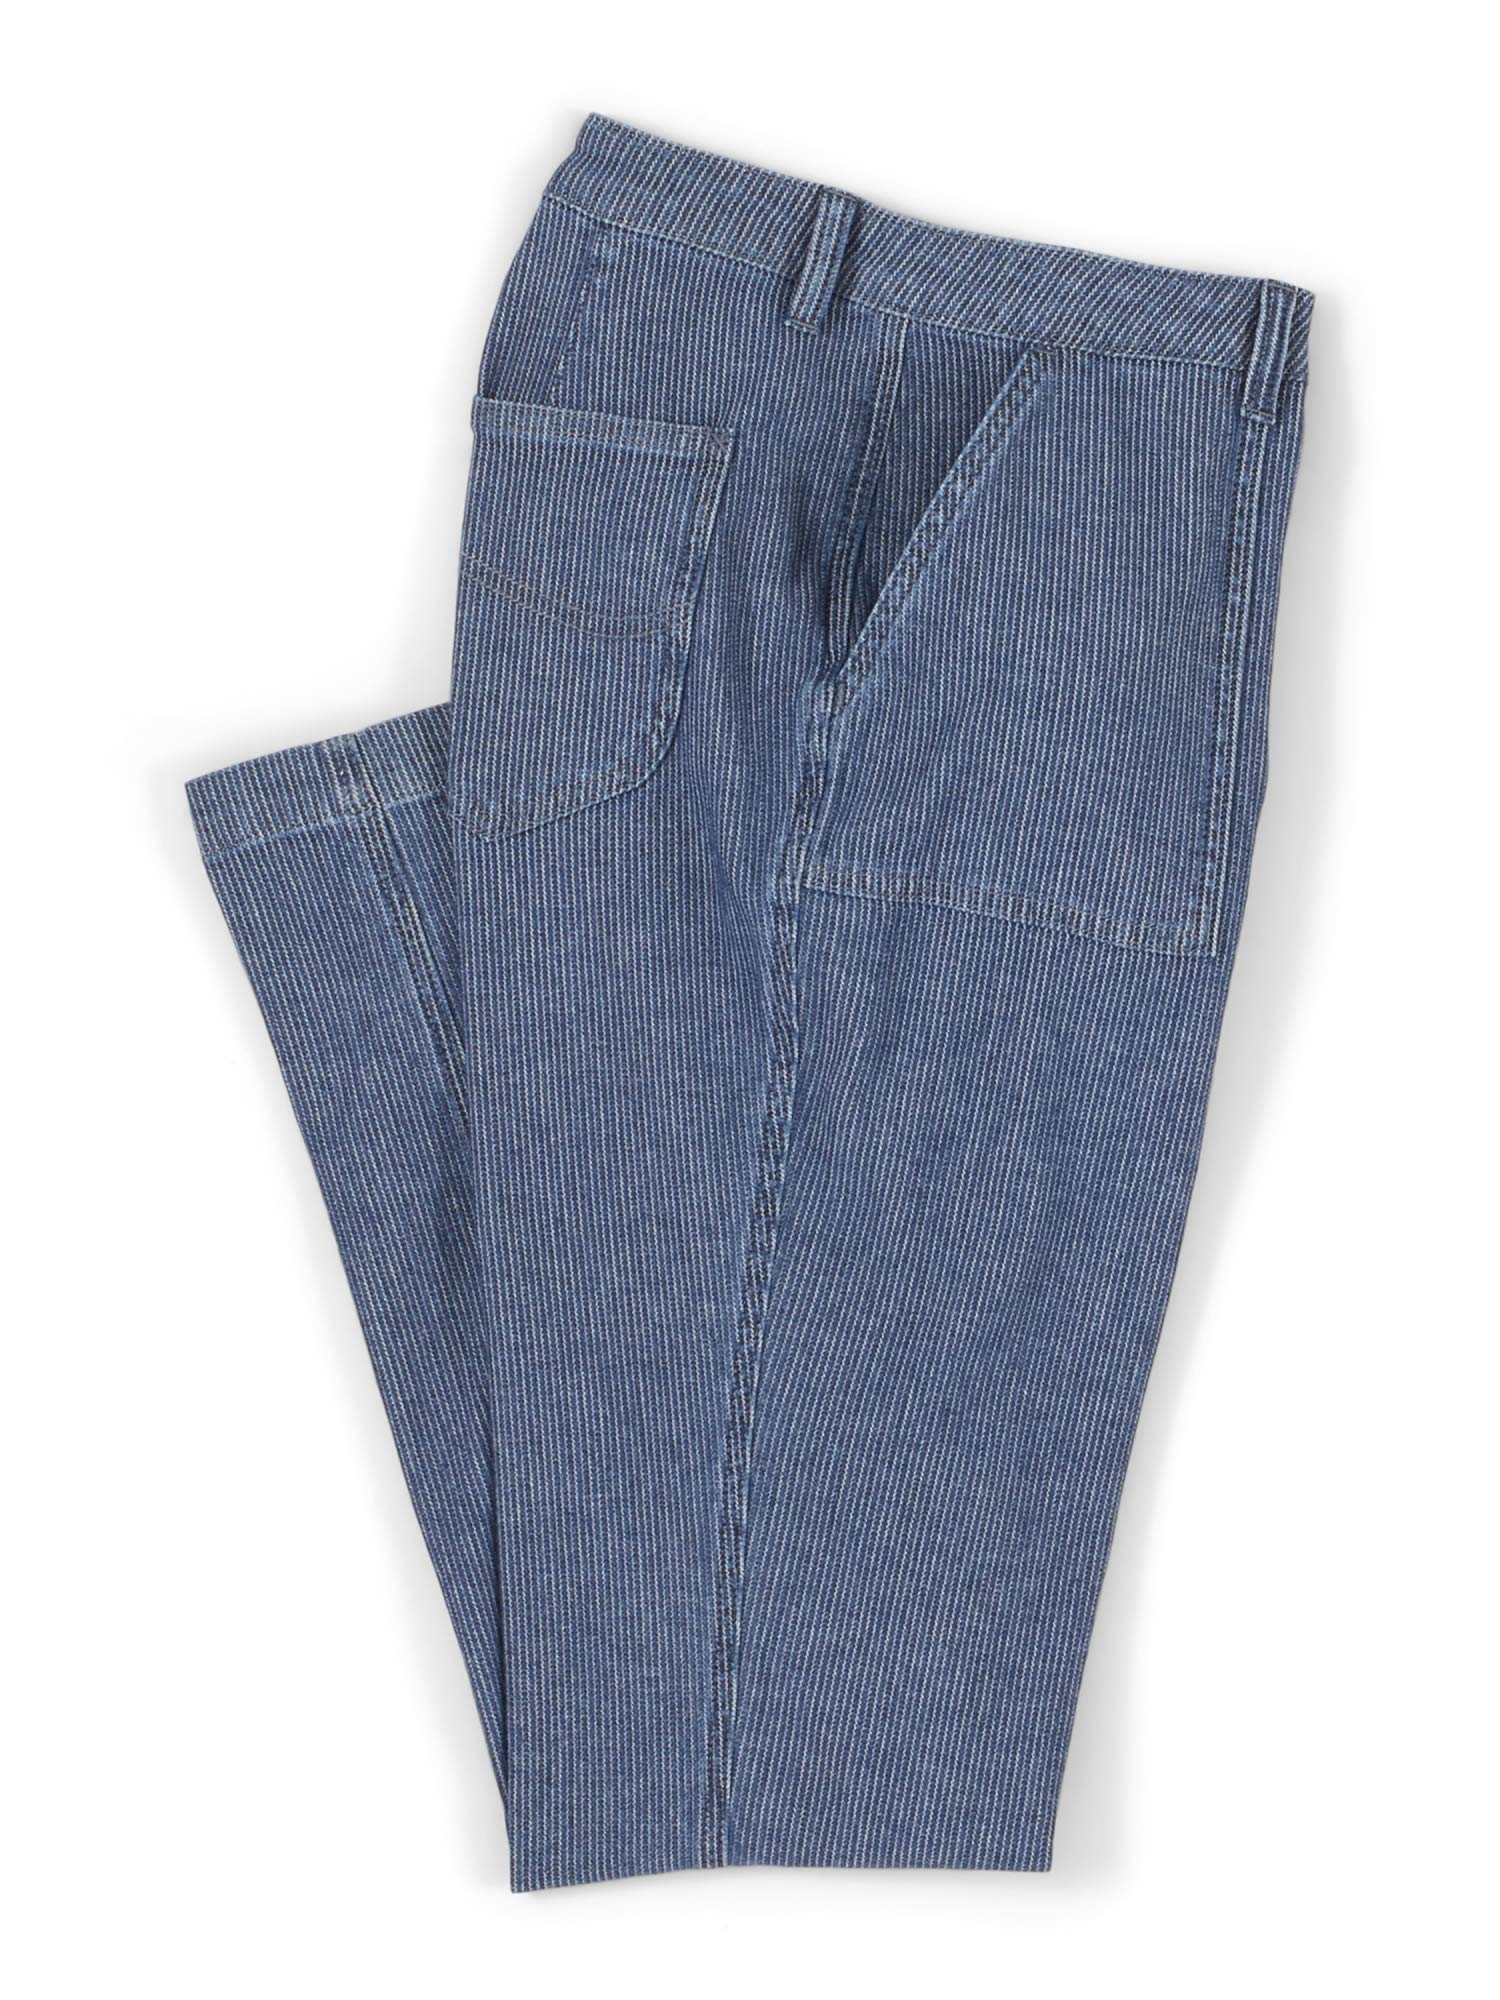 Lee Women's Legendary Regular Fit Tapered Utility Pant, Medium Blue Herringbone Stripe, 48